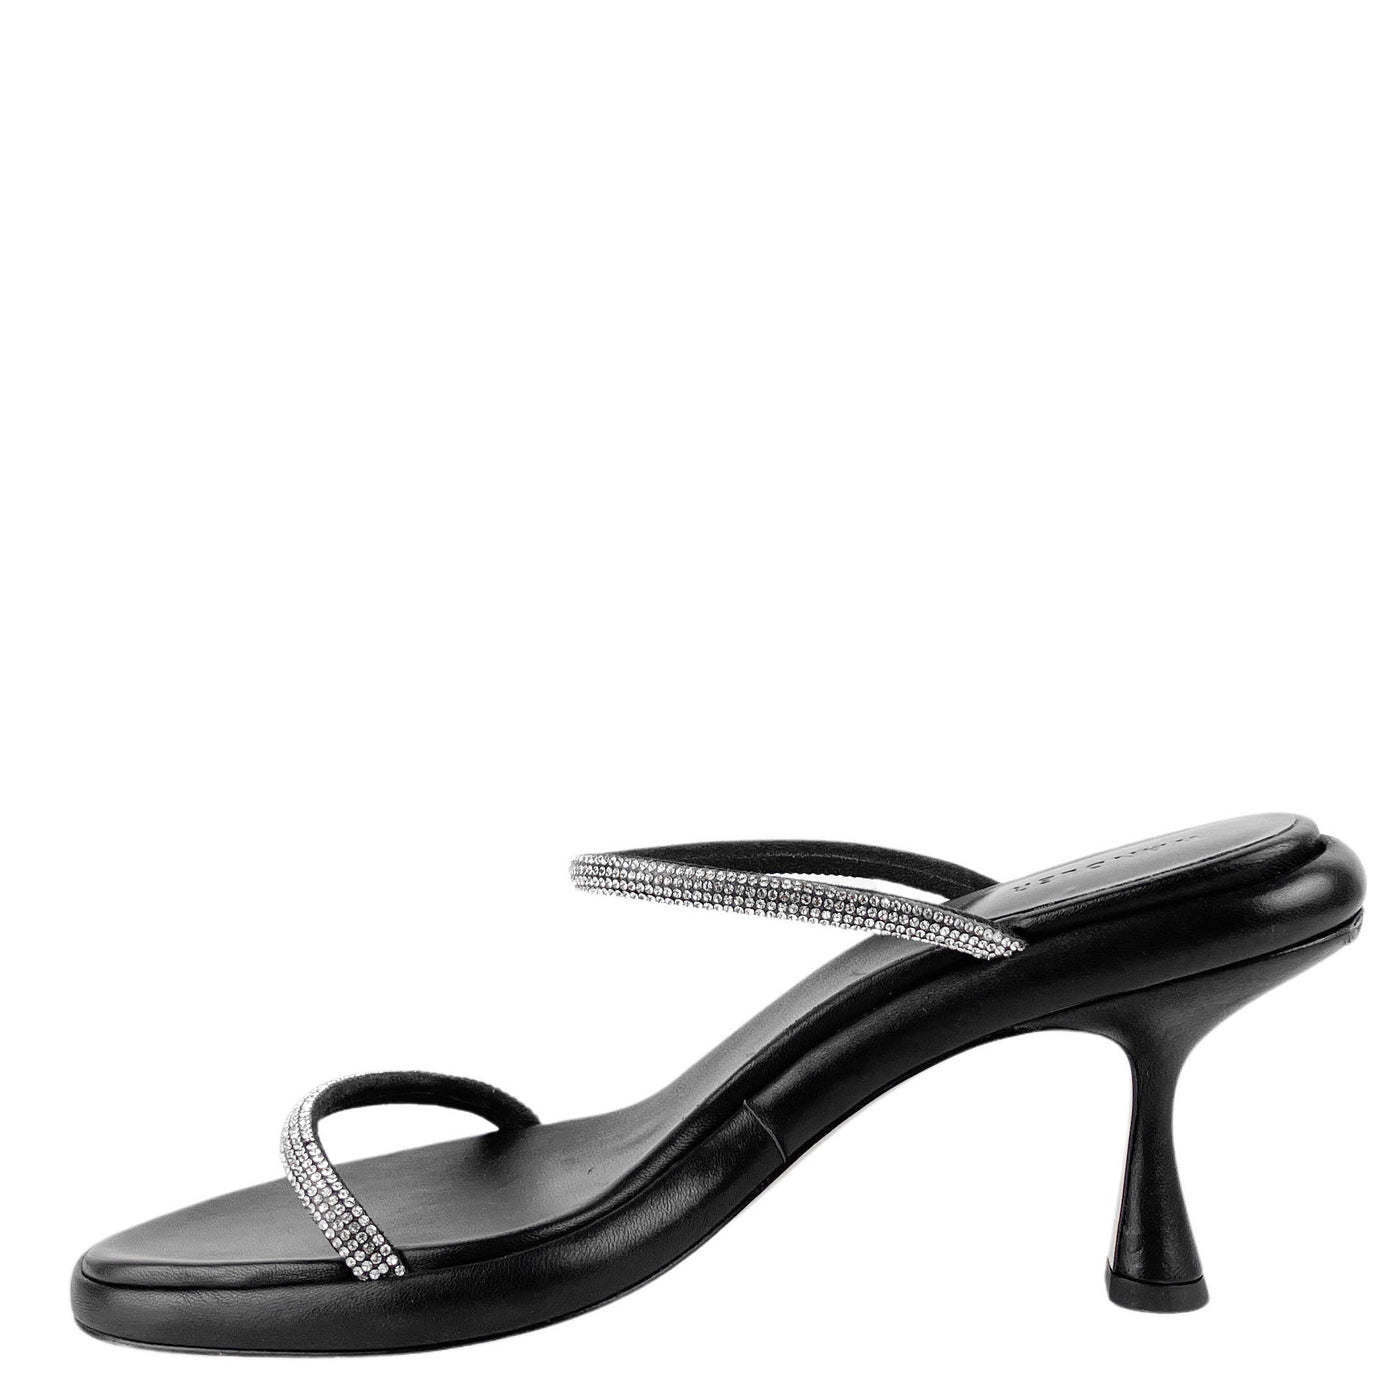 Wandler June Embellished Heels in Black - Discounts on Wandler at UAL